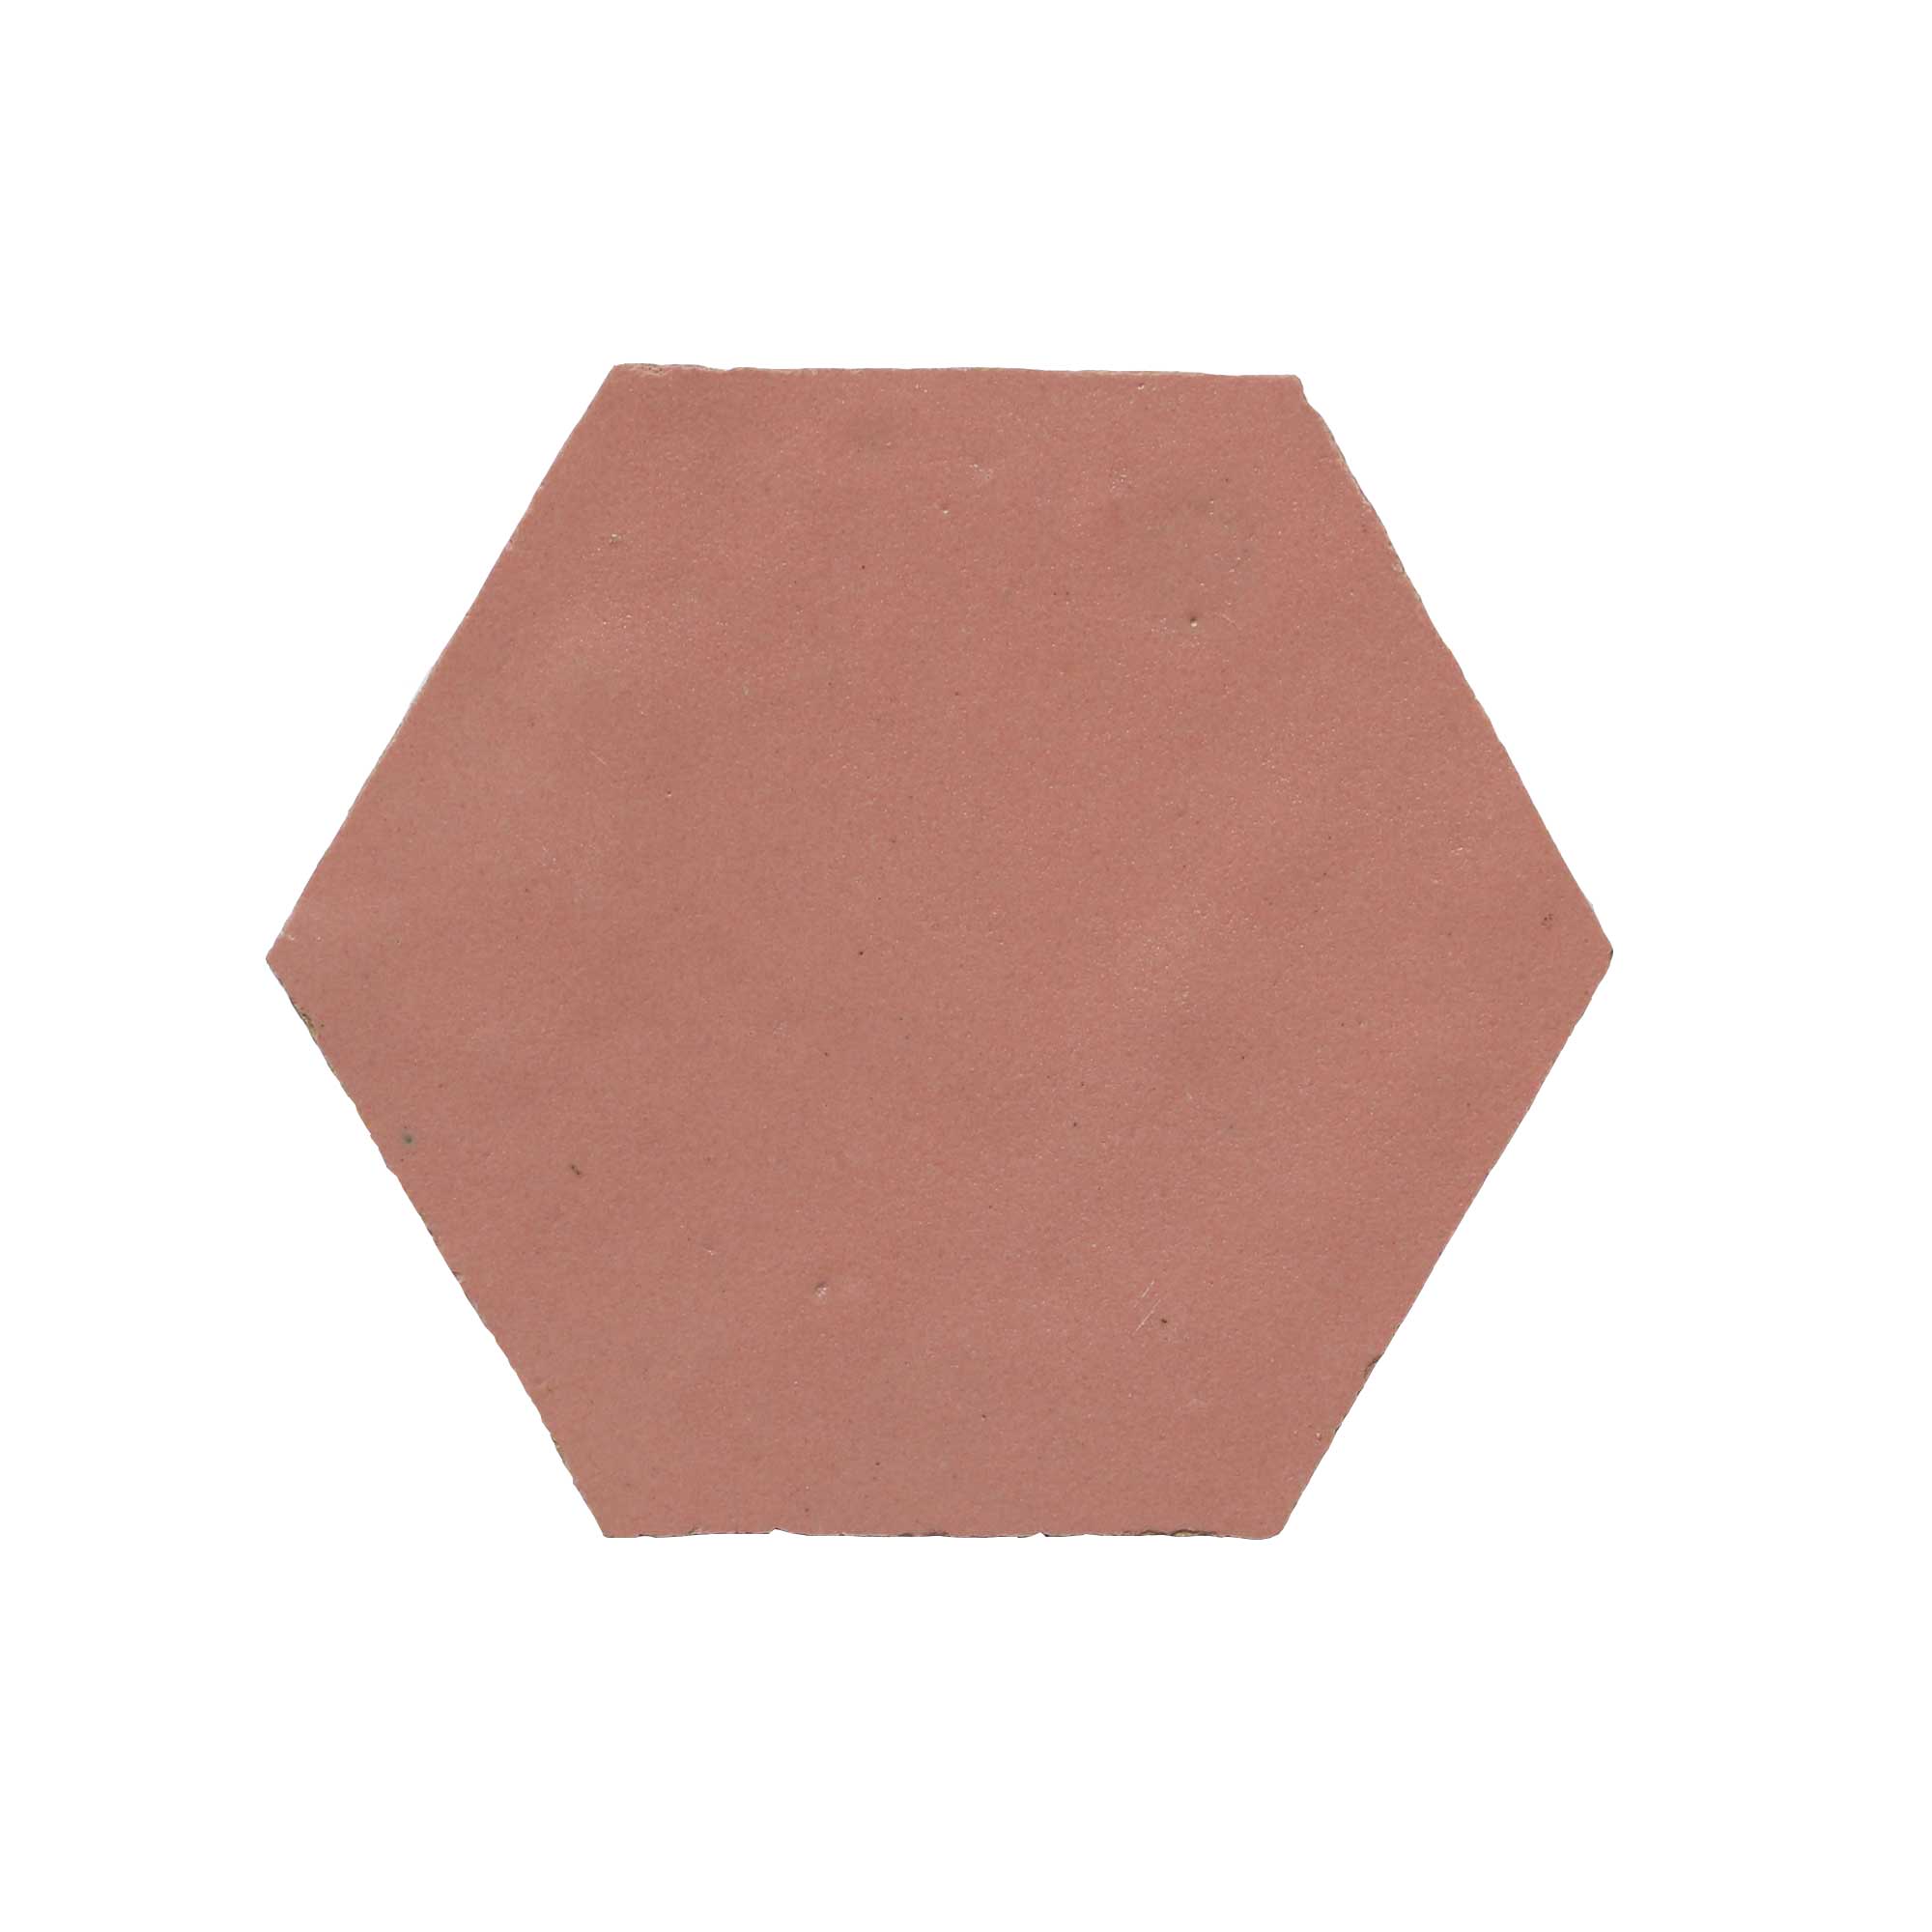 Hexagon shaped zellige tiles